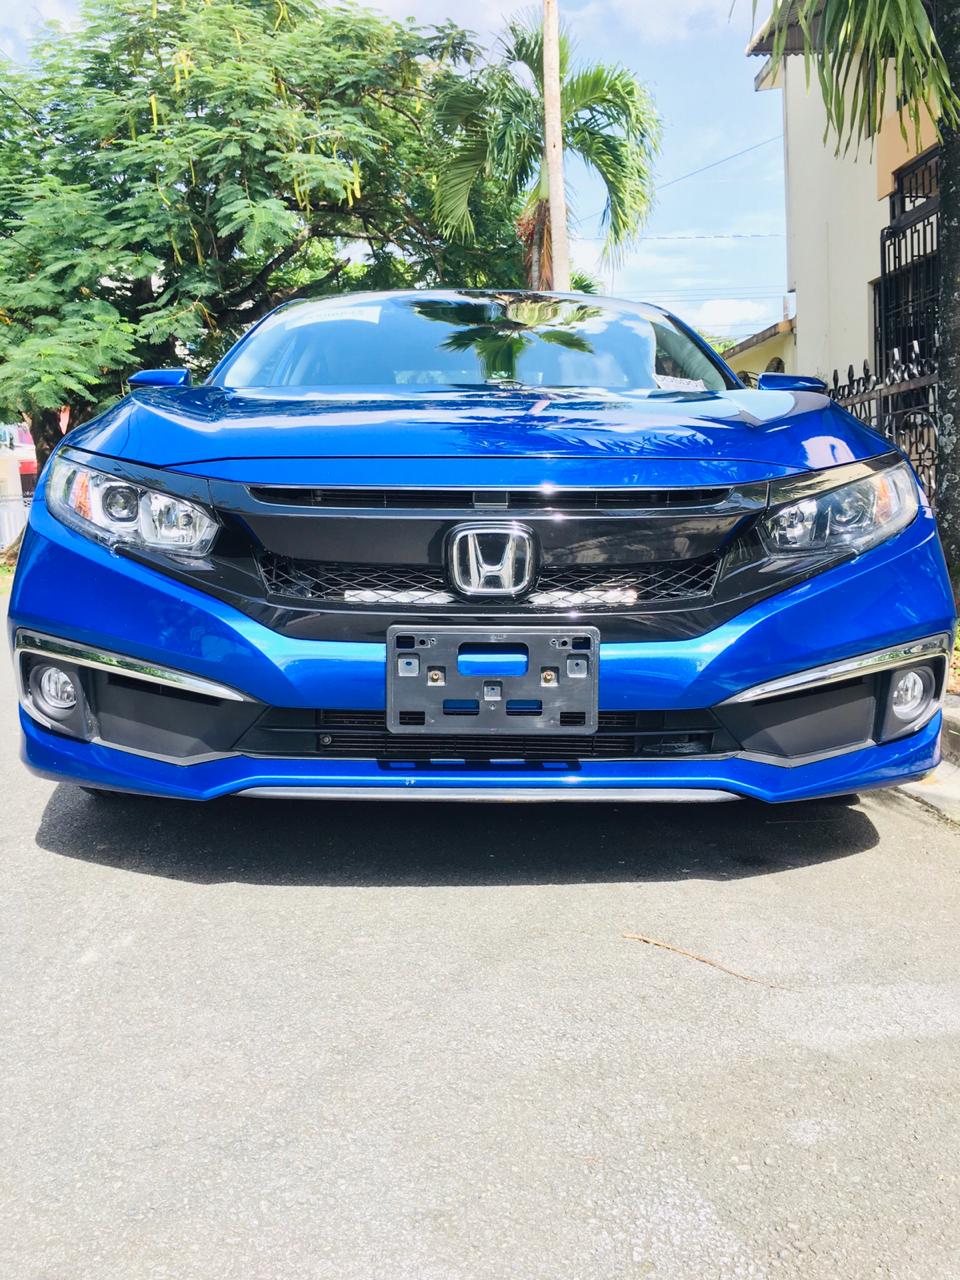 Honda Civic 2019 Nuevo